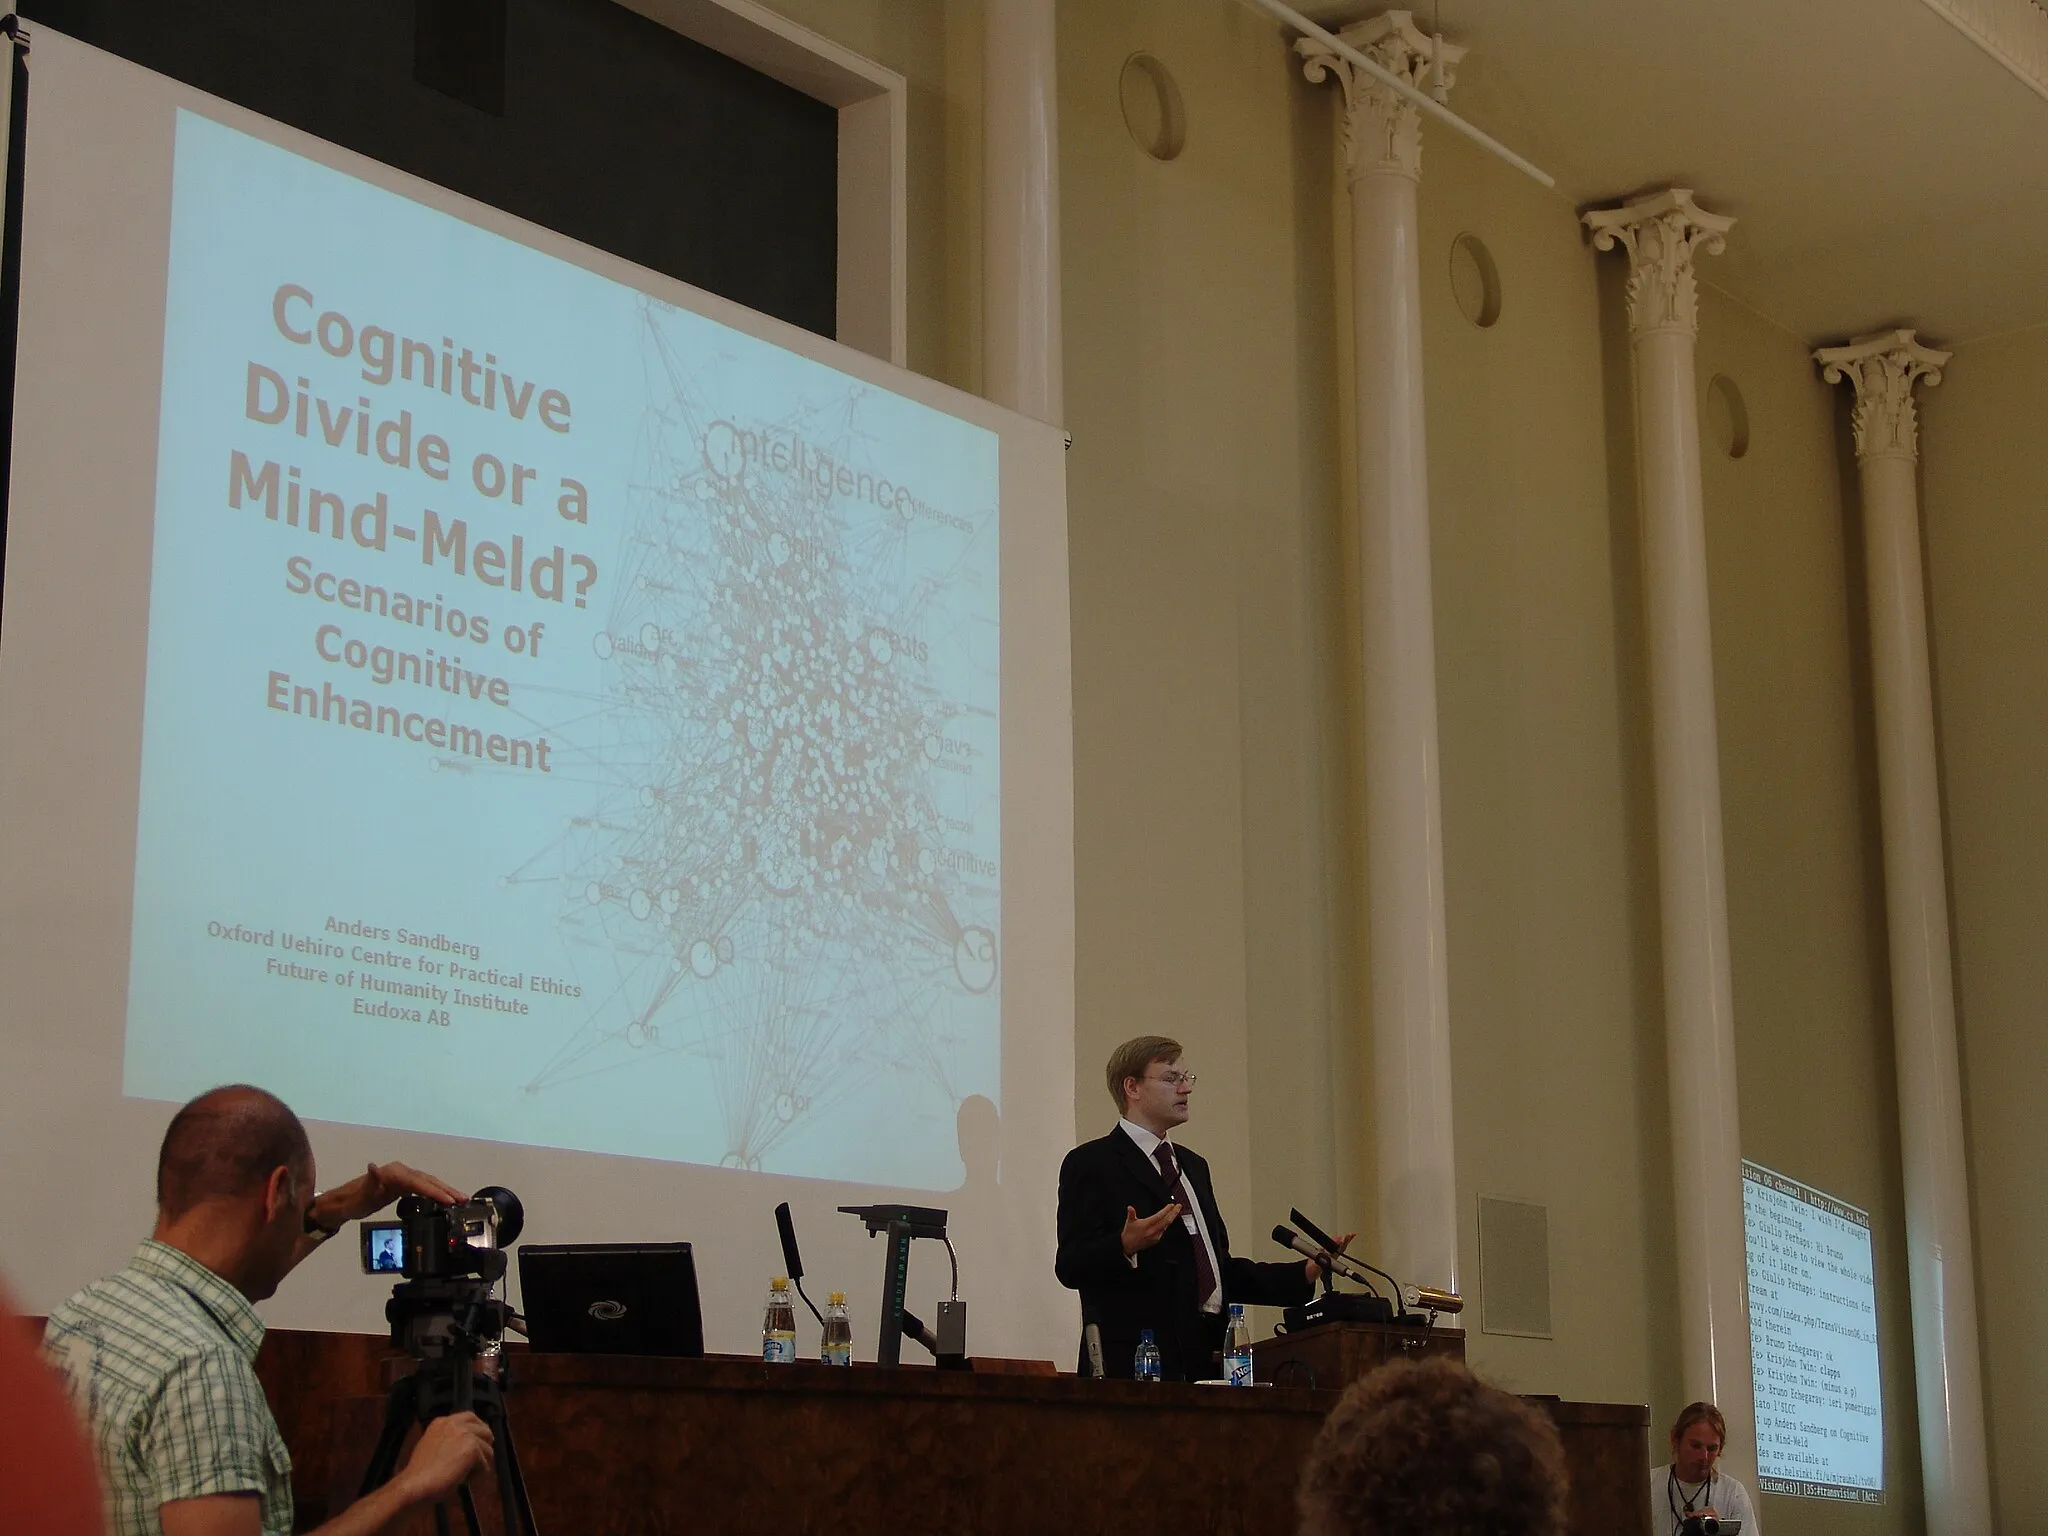 Photo showing: Anders Sandberg at University of Helsinki:
"Cognitive Divide or a Mind-Meld? : Scenarios of Cognitive Enhancement" event.